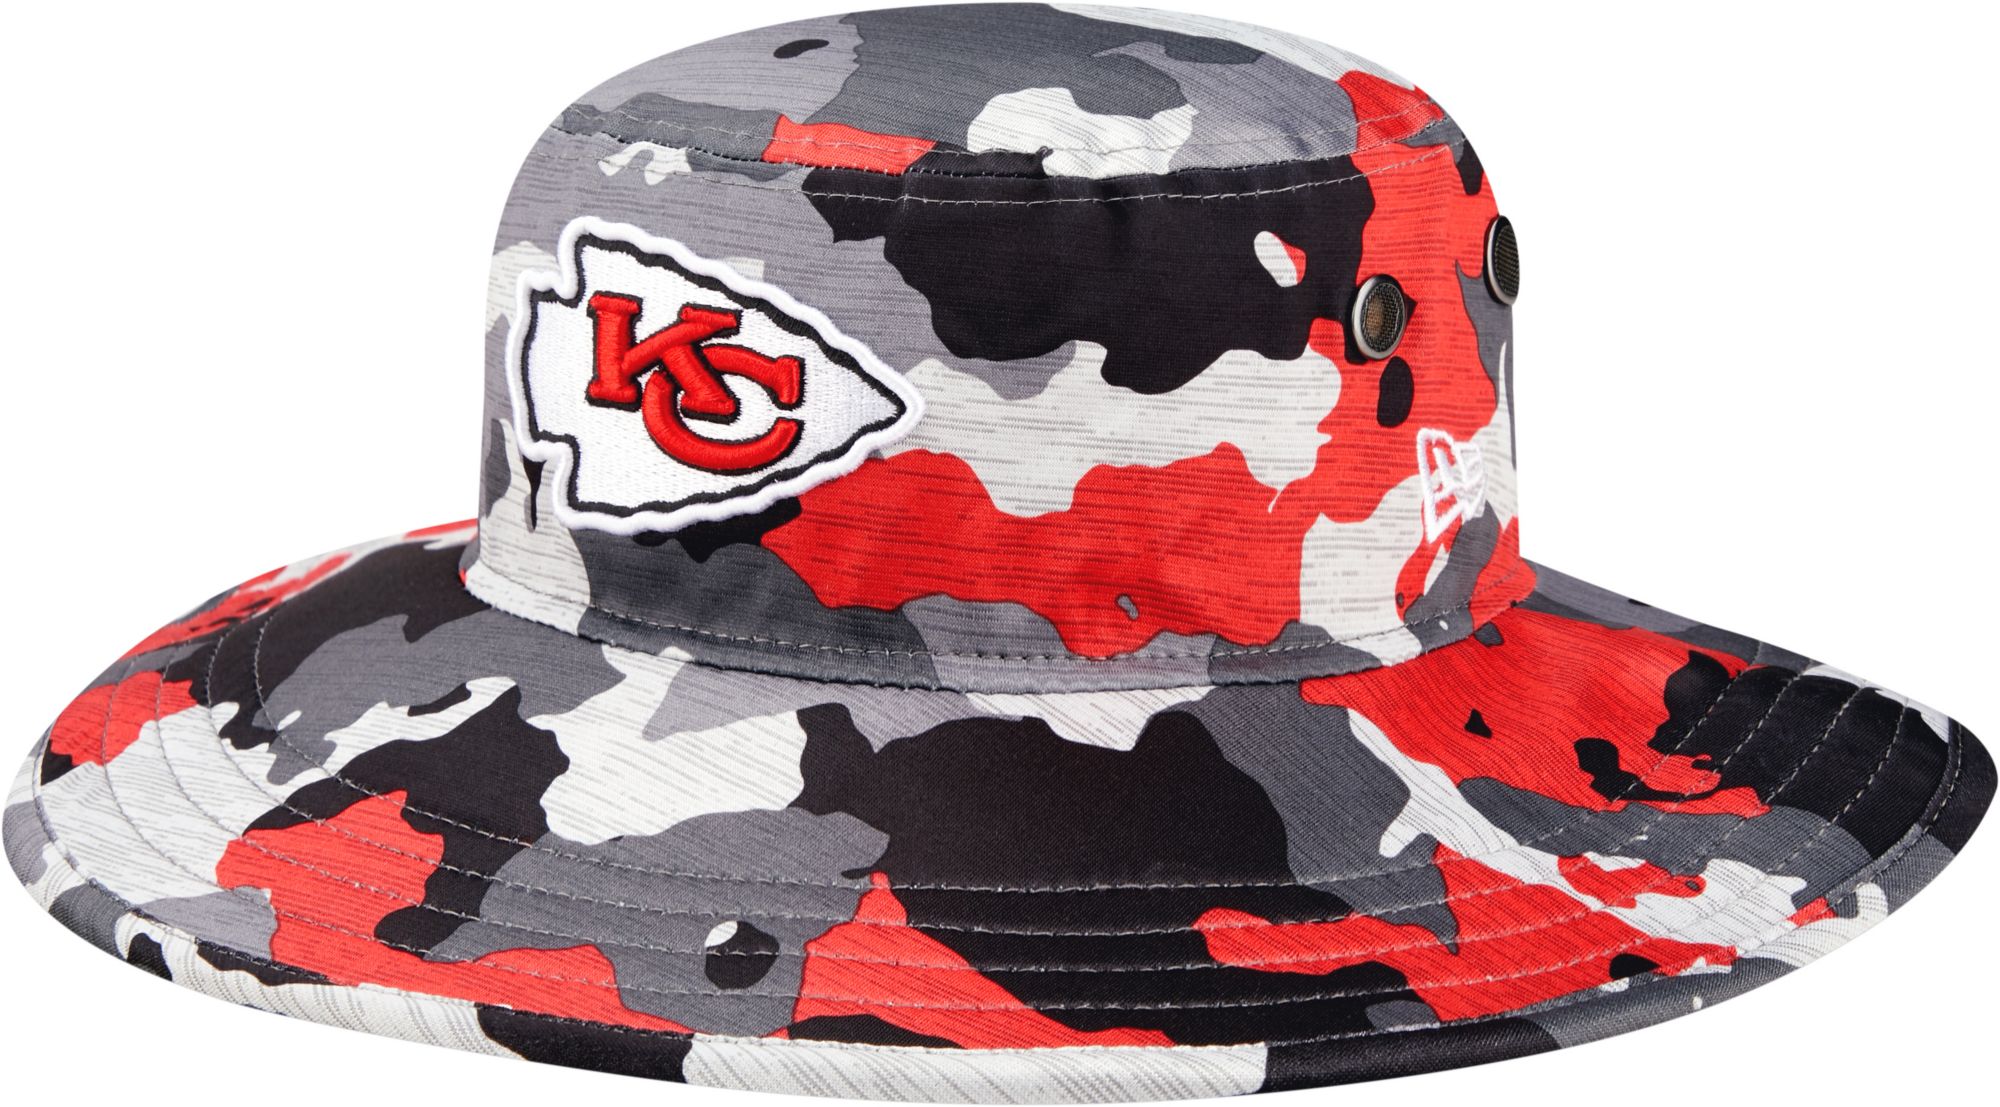 Kansas City Chiefs 2021 NFL TRAINING CAMP SNAPBACK Hat